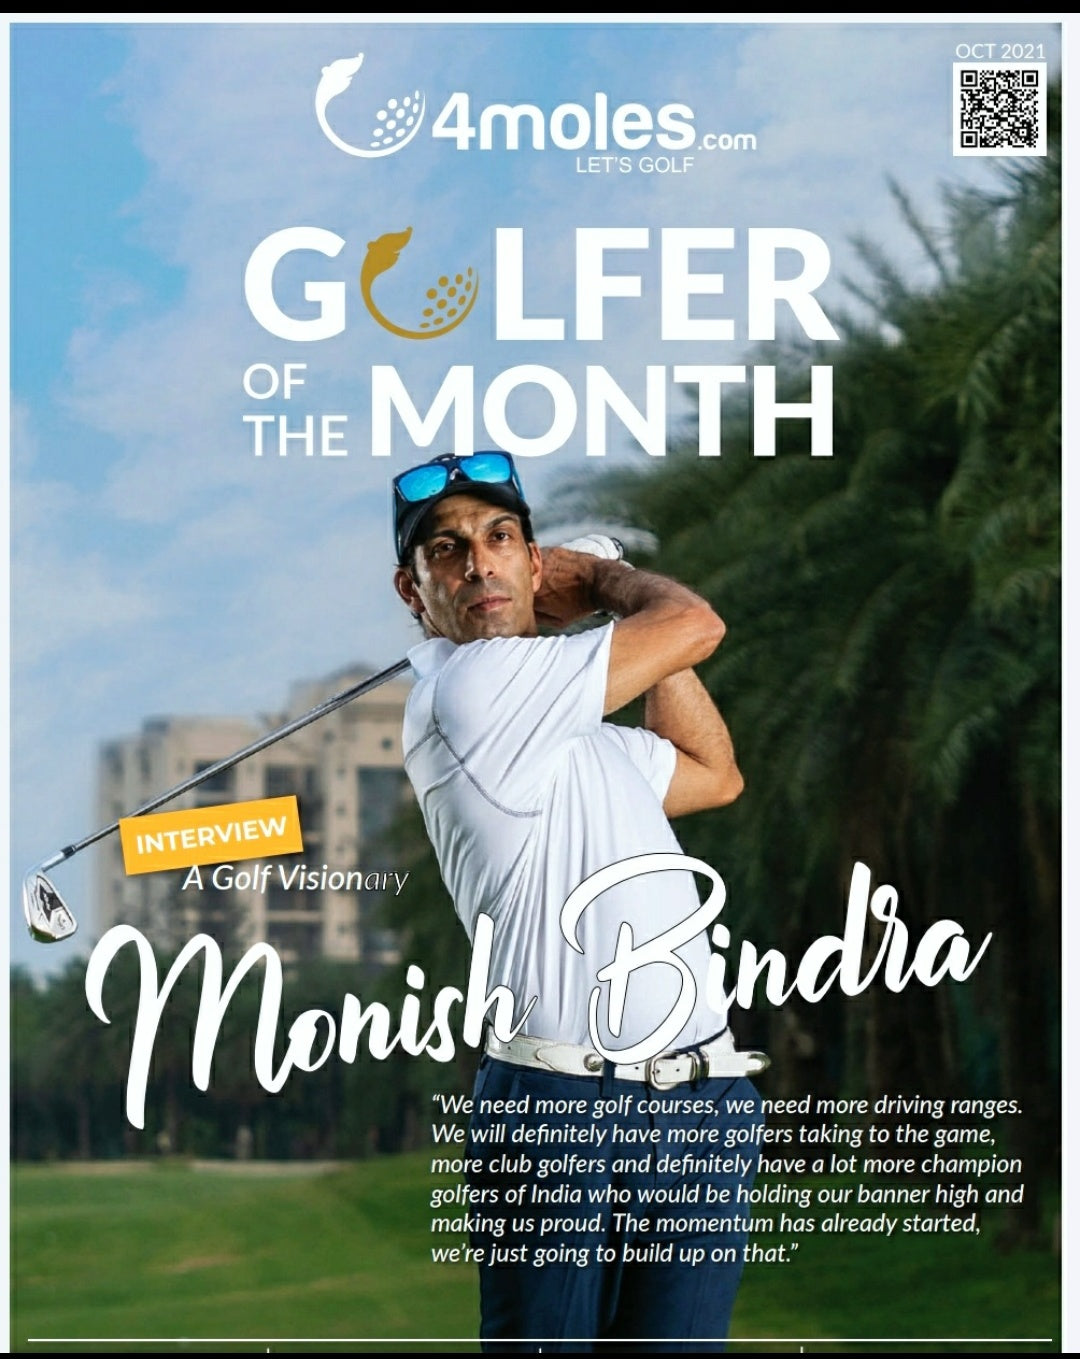 Monish Bindra adjudged Golfer of the month by 4moles.com